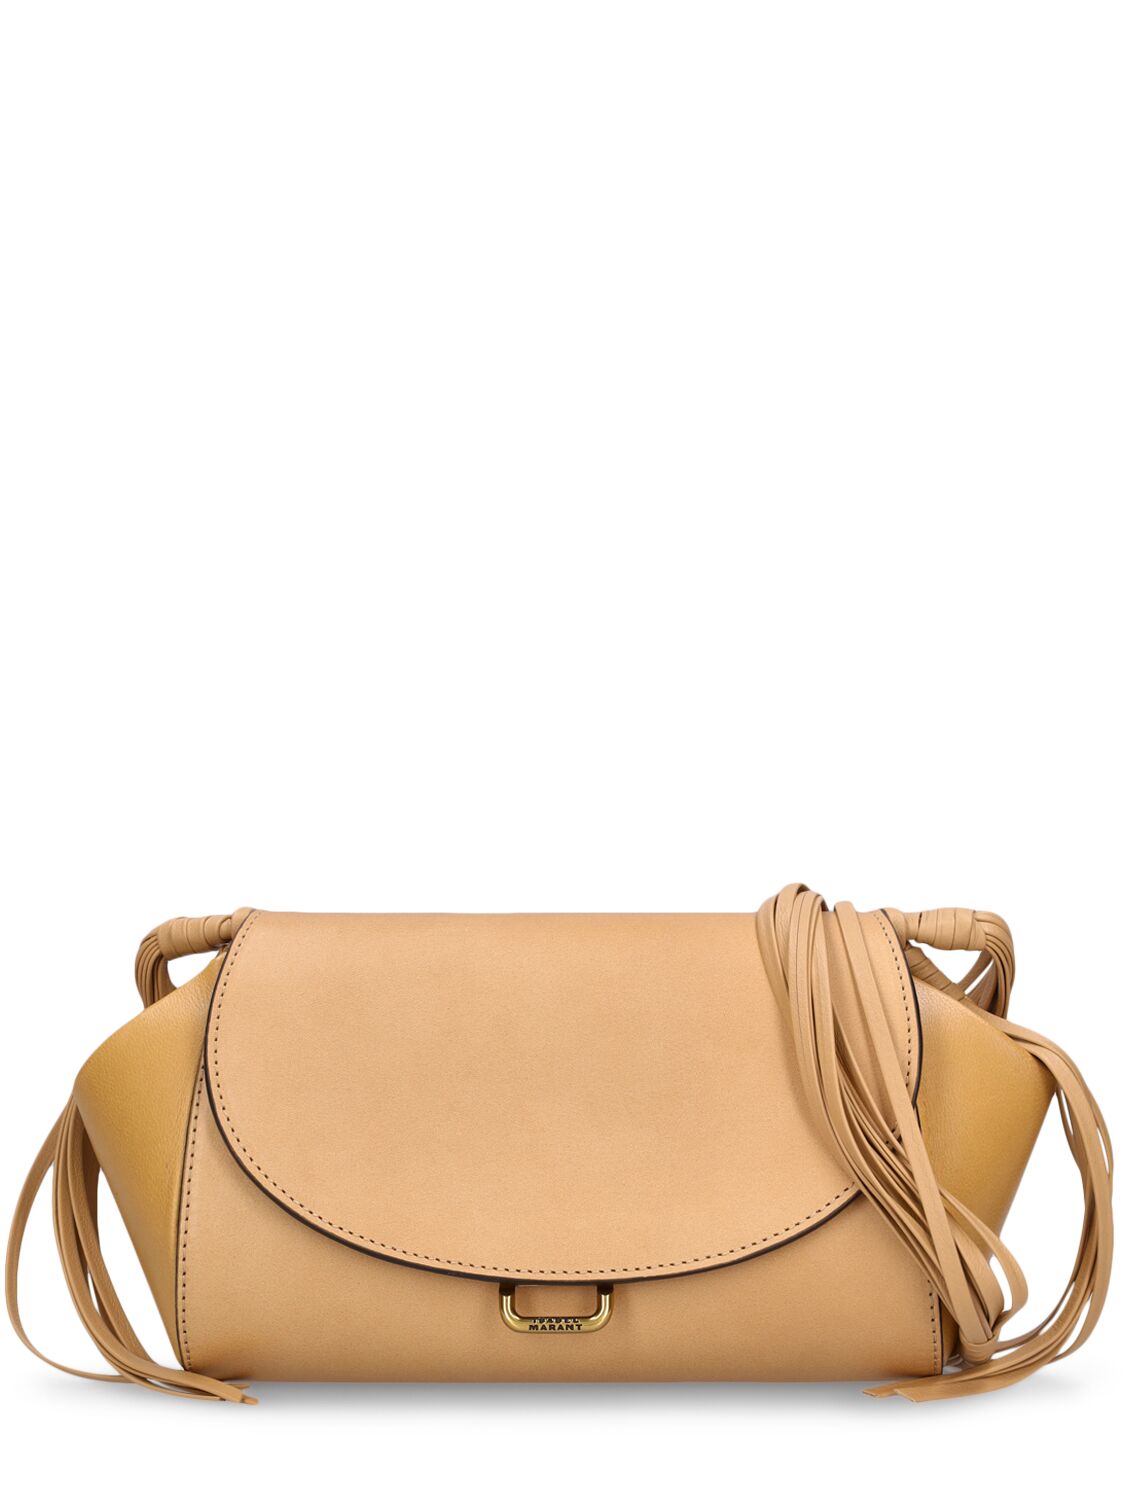 Isabel Marant Medium Murcia Leather Shoulder Bag In Neutral